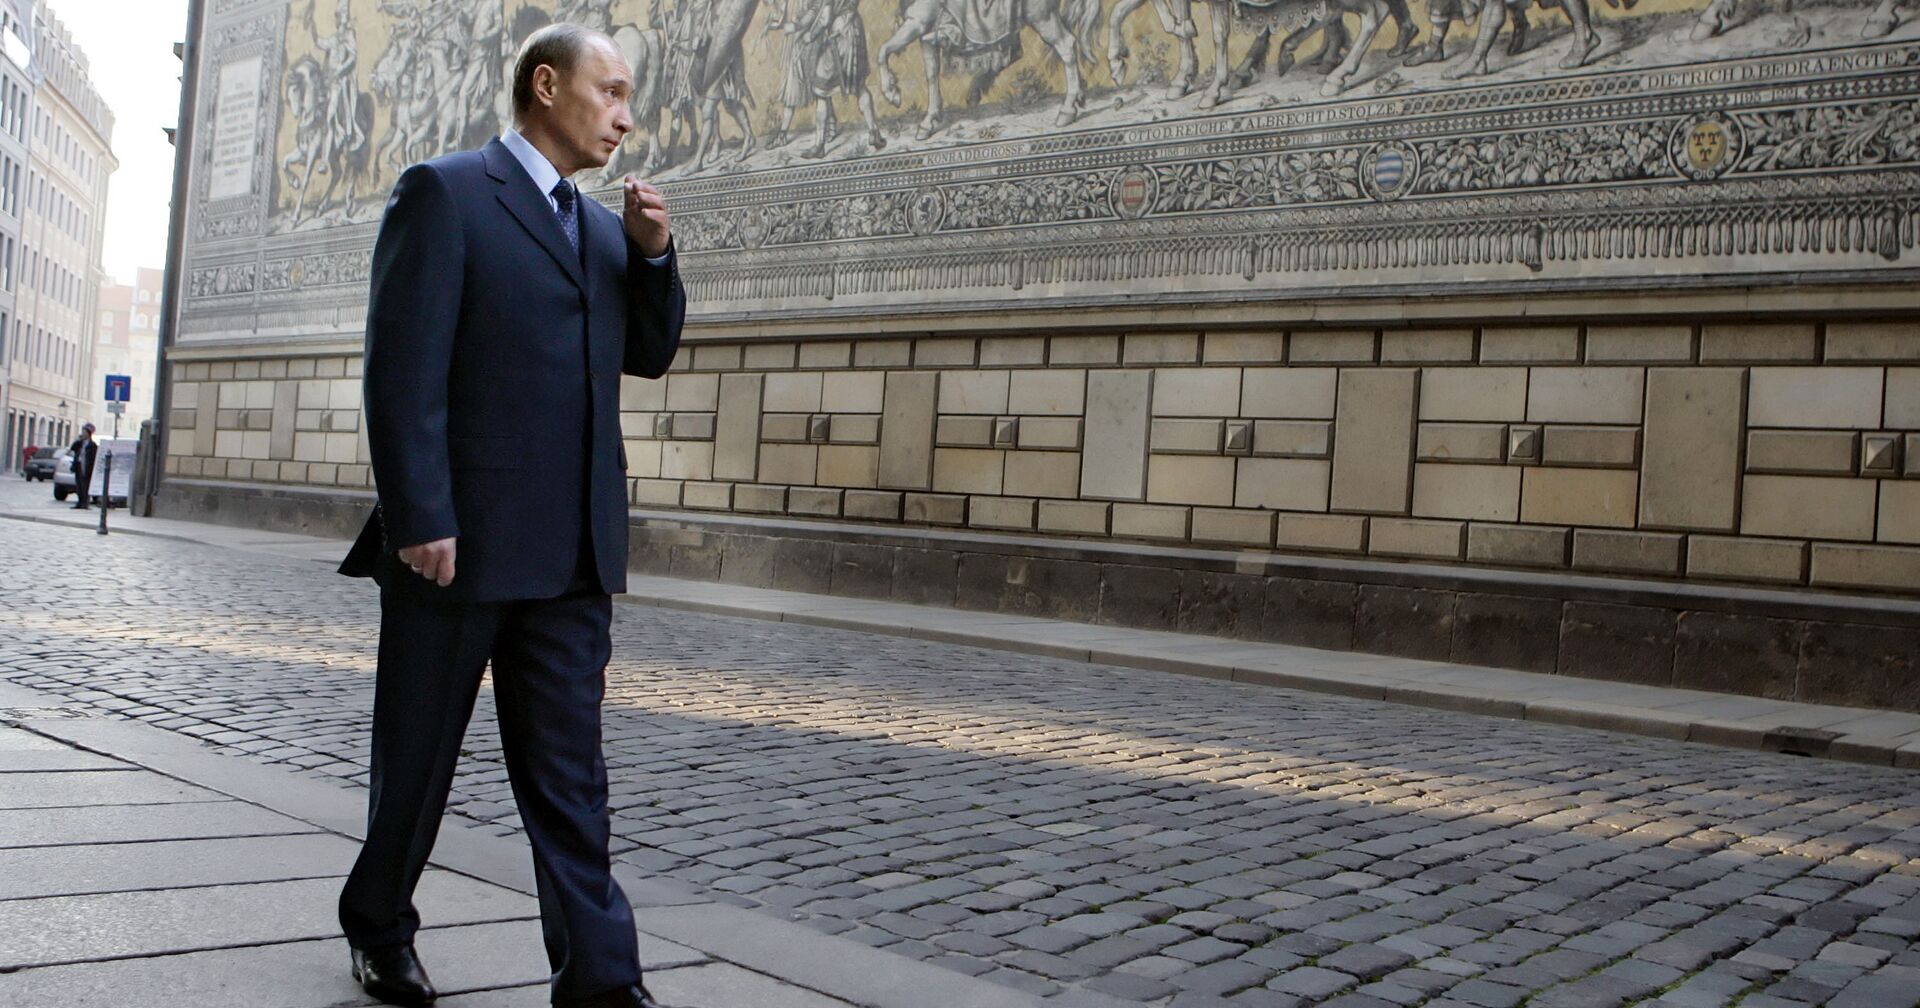 Владимир Путин во время визита в Дрезден, Германия - ИноСМИ, 1920, 27.01.2021